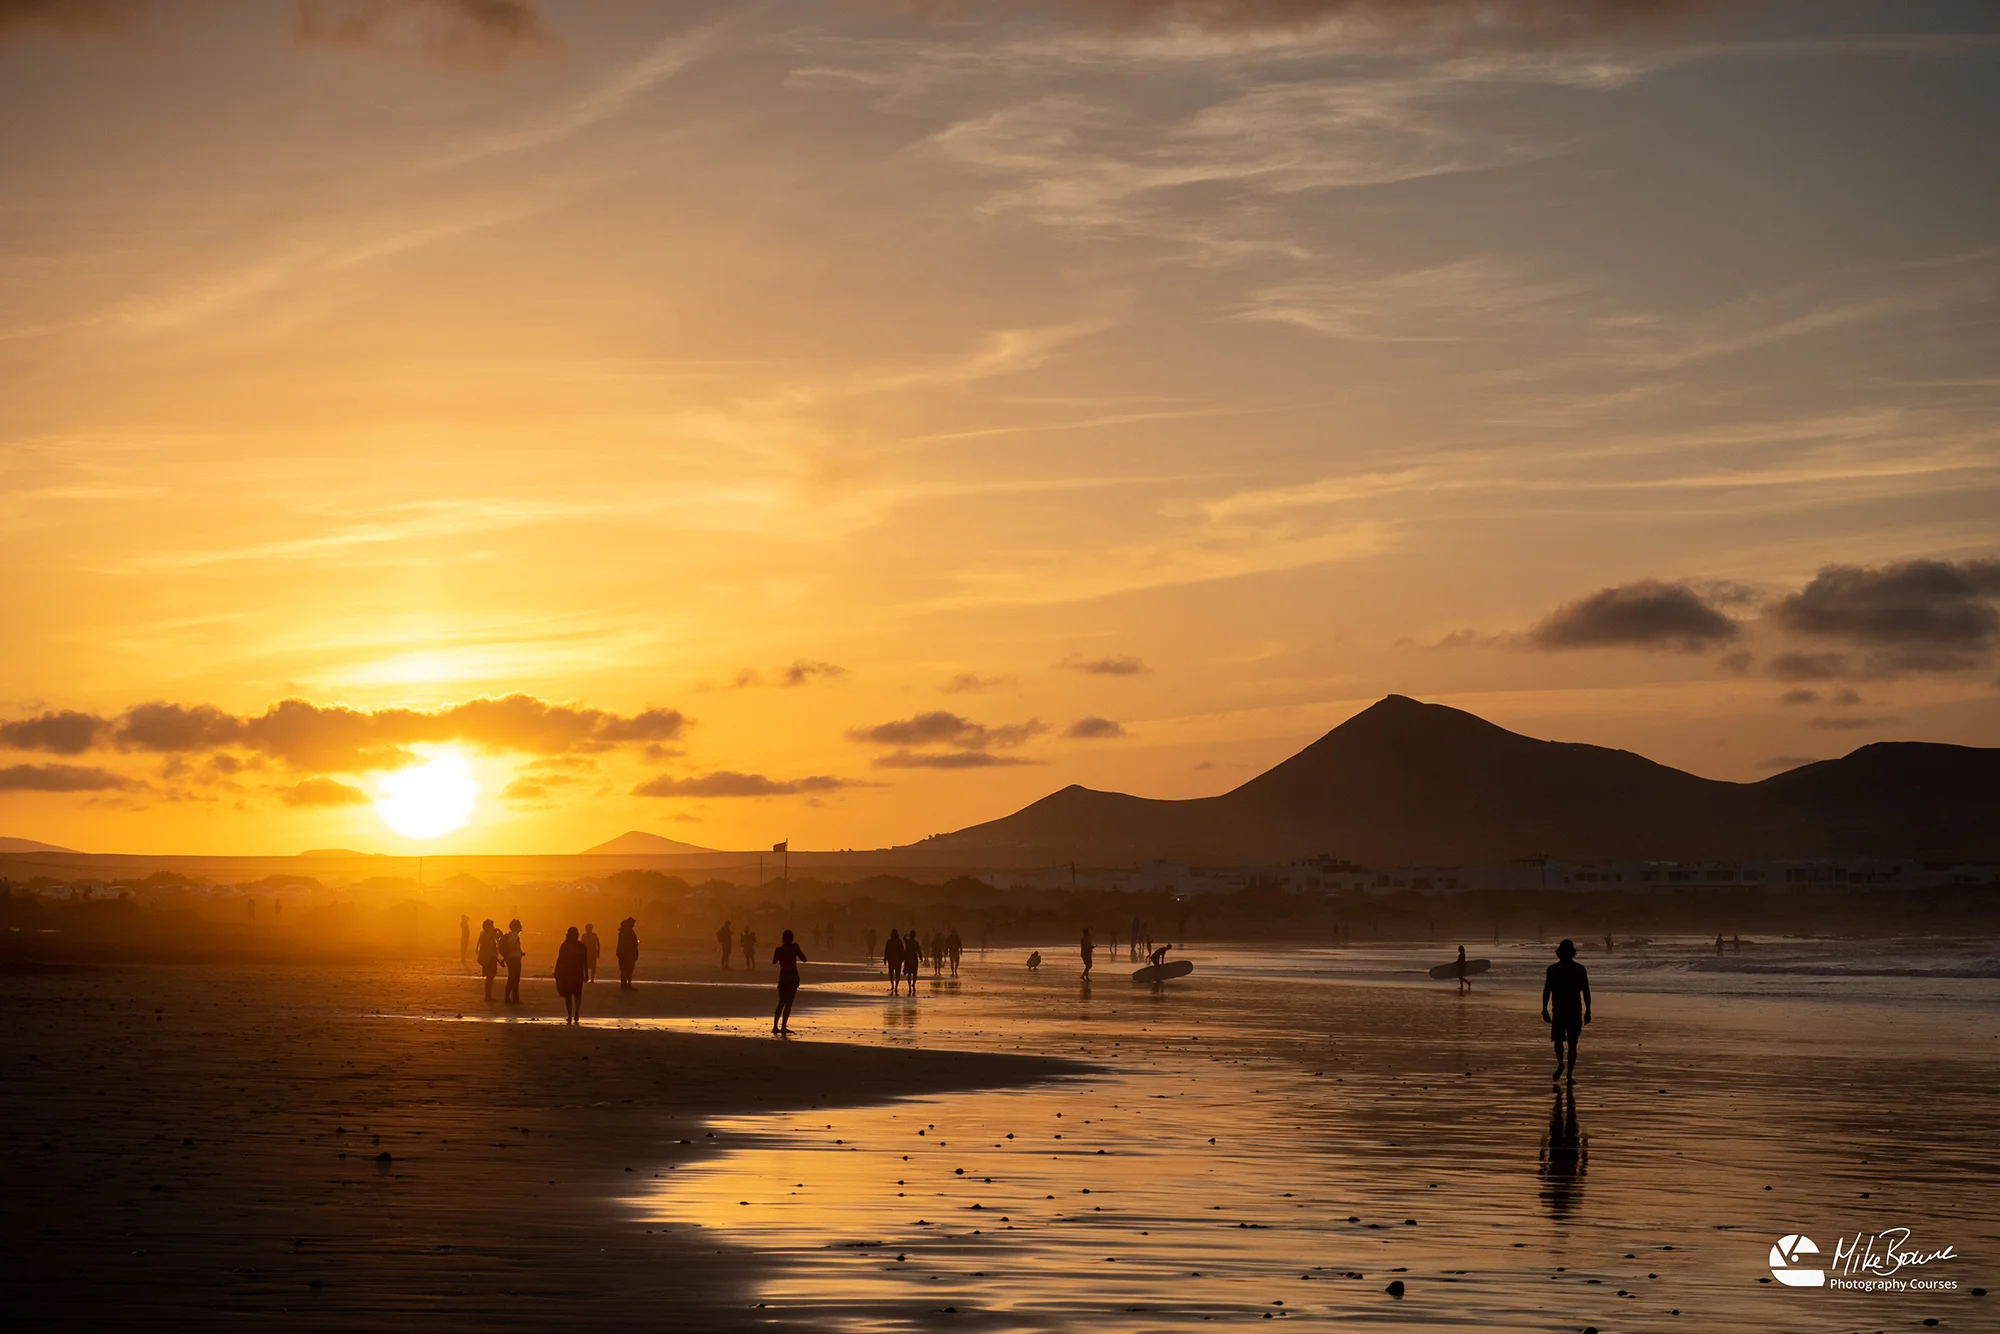 Sunset reflected on wet sand at Famara Beach, Lanzarote